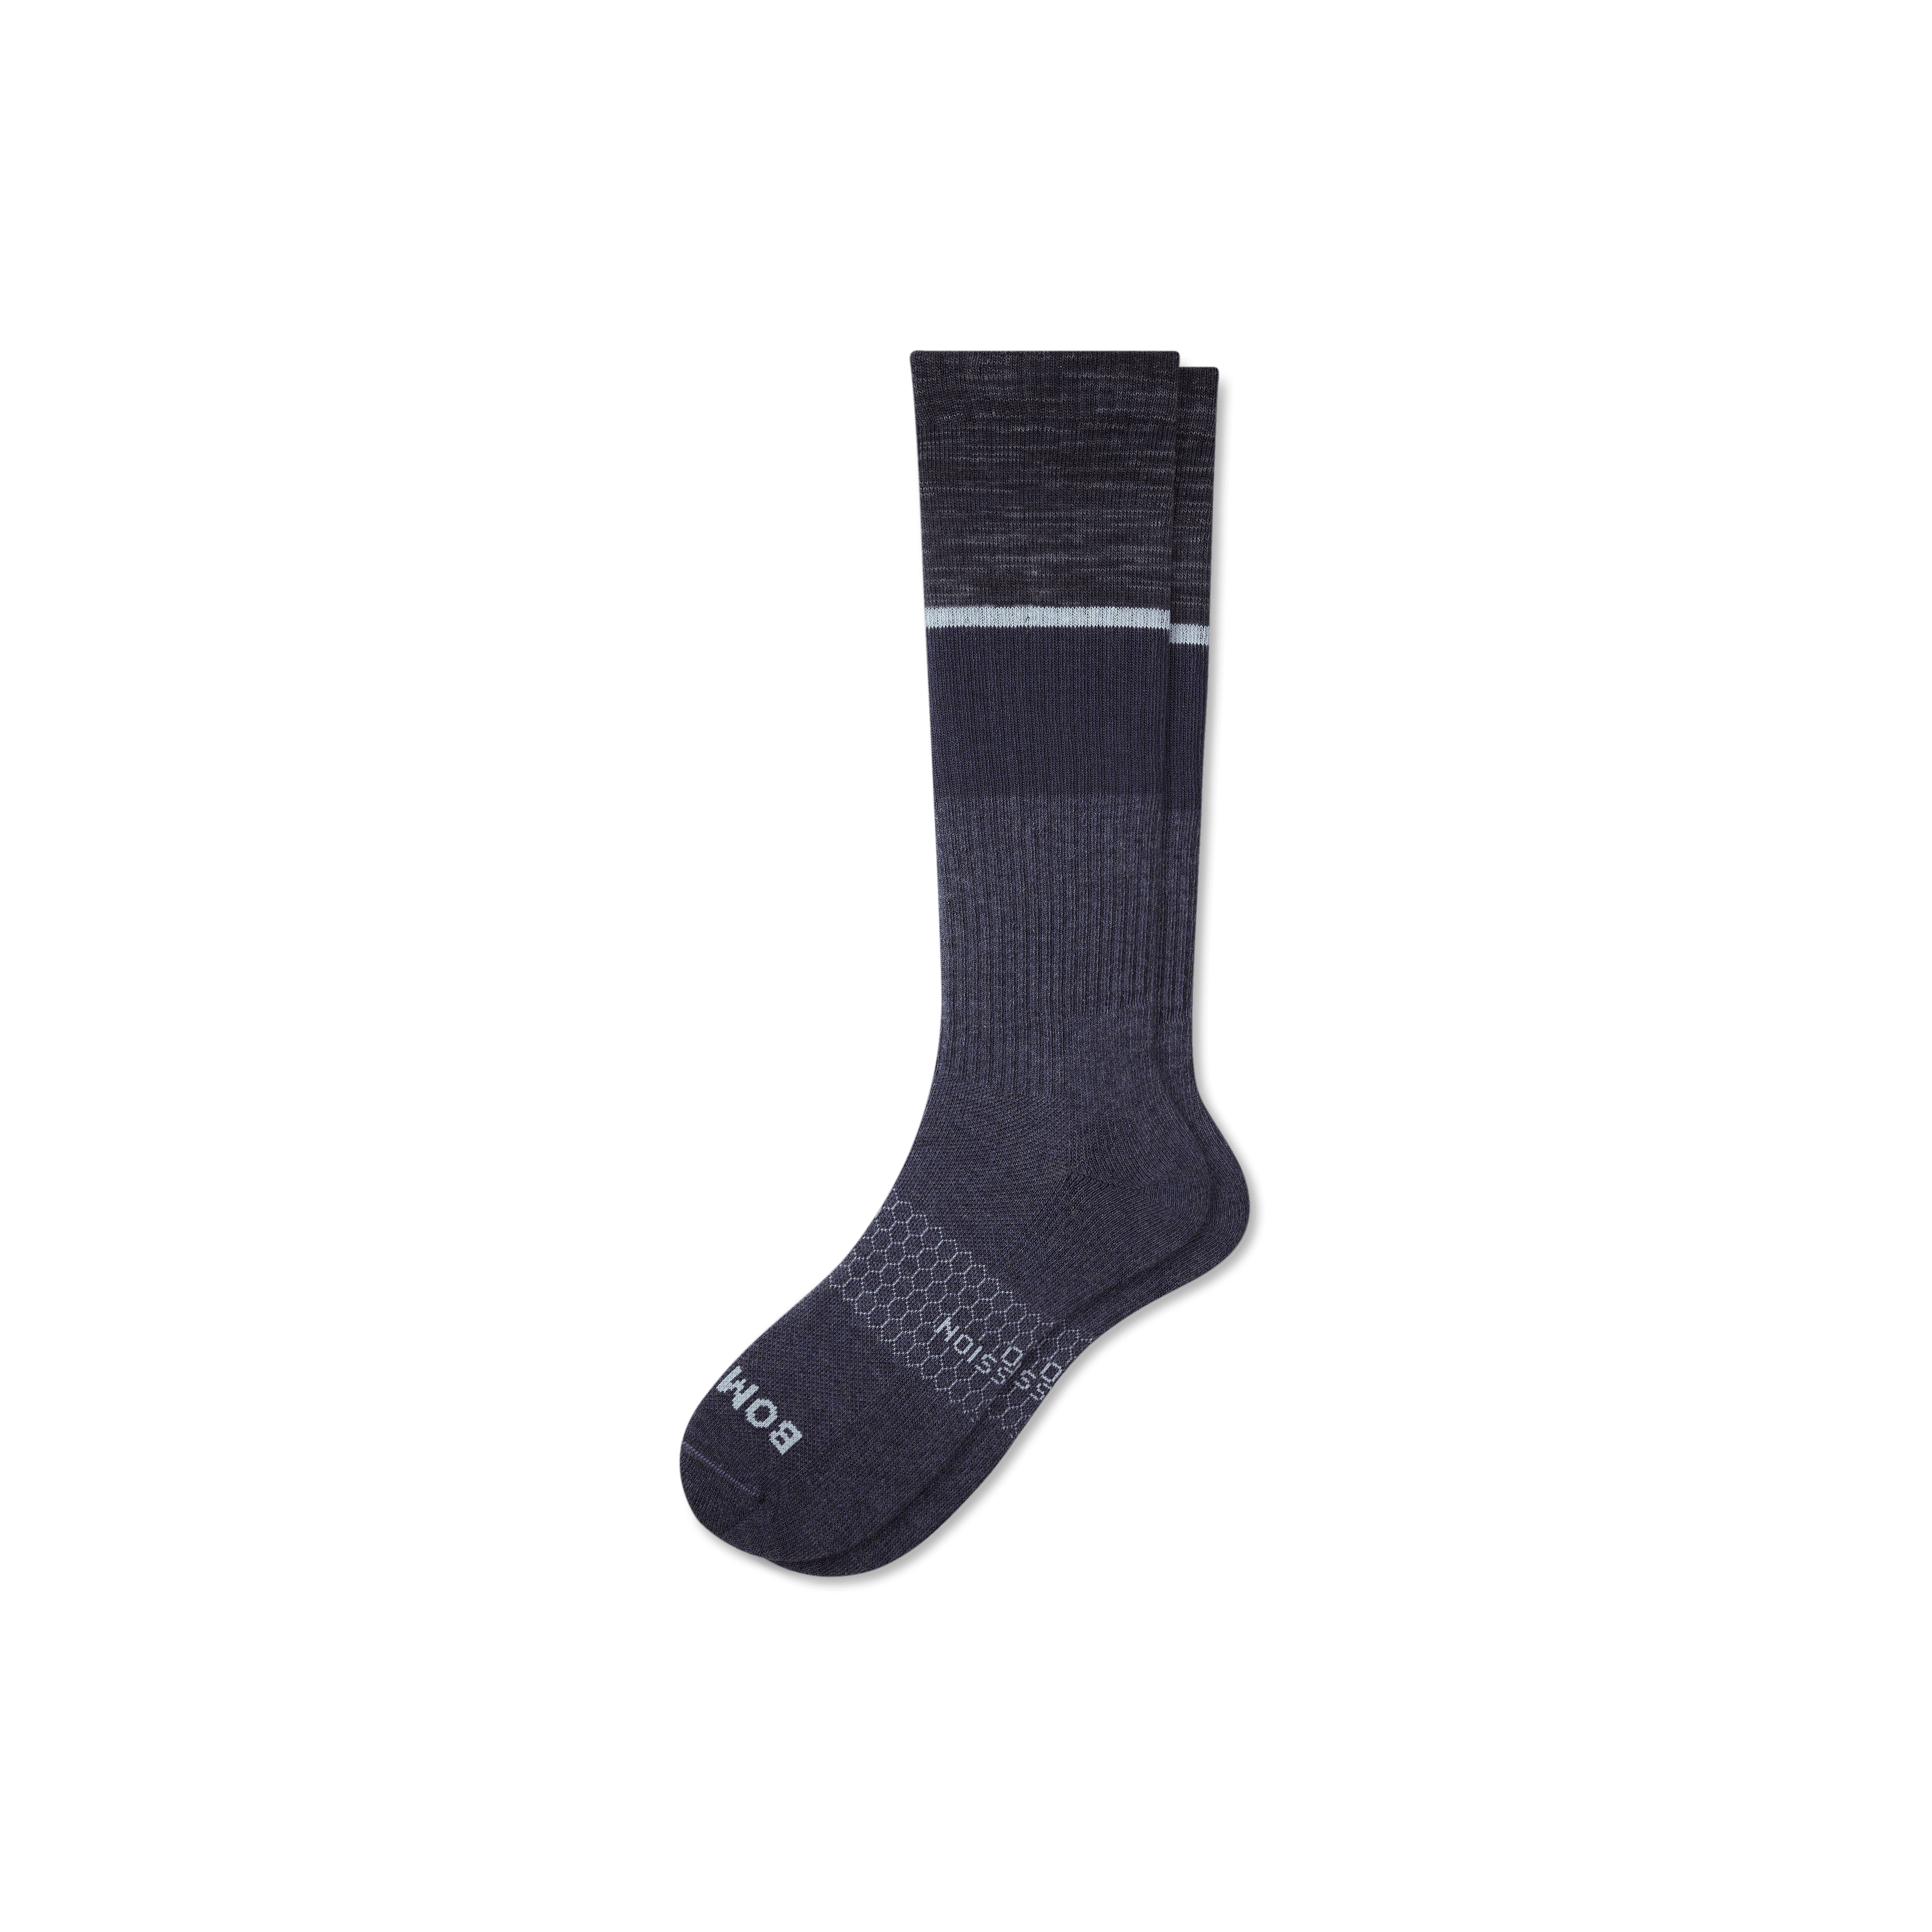 Bombas Everyday Compression Socks (15-20mmhg) In Nightfall